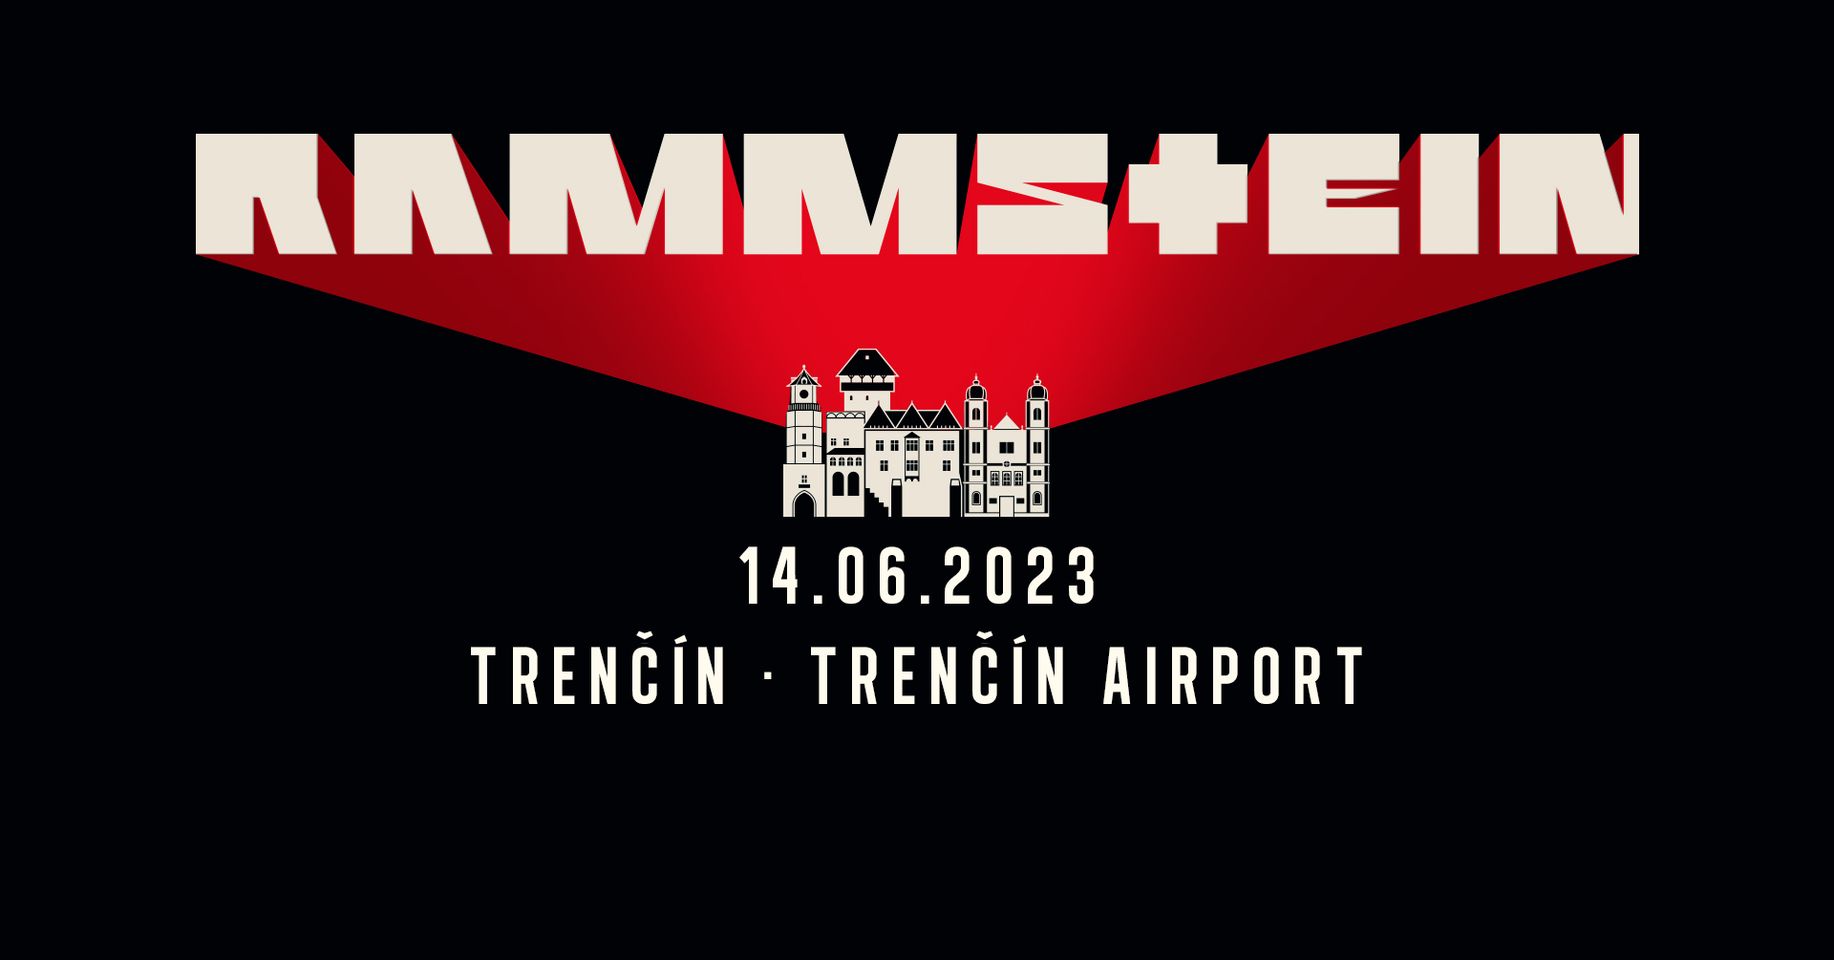 Rammstein Trenčín Slovakia  Trenčín Airport